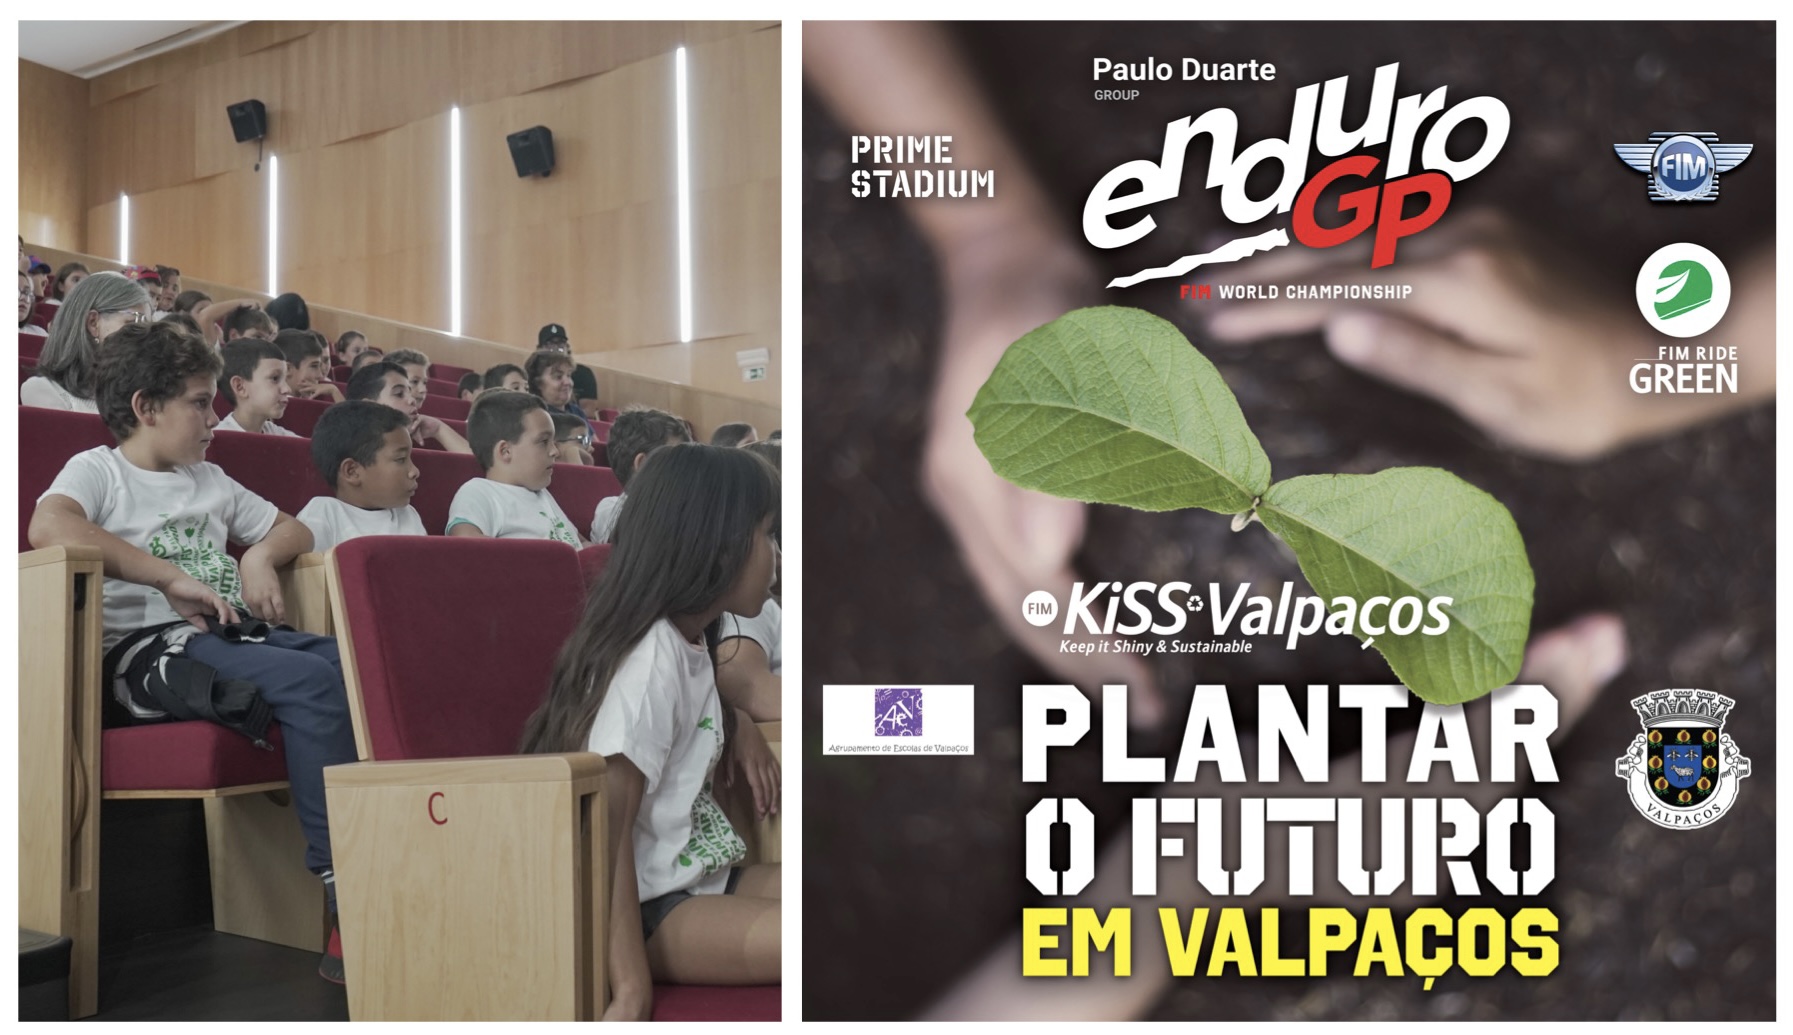 EnduroGP: Prime Stadium promove a iniciativa “Plantar o futuro em Valpaços” thumbnail